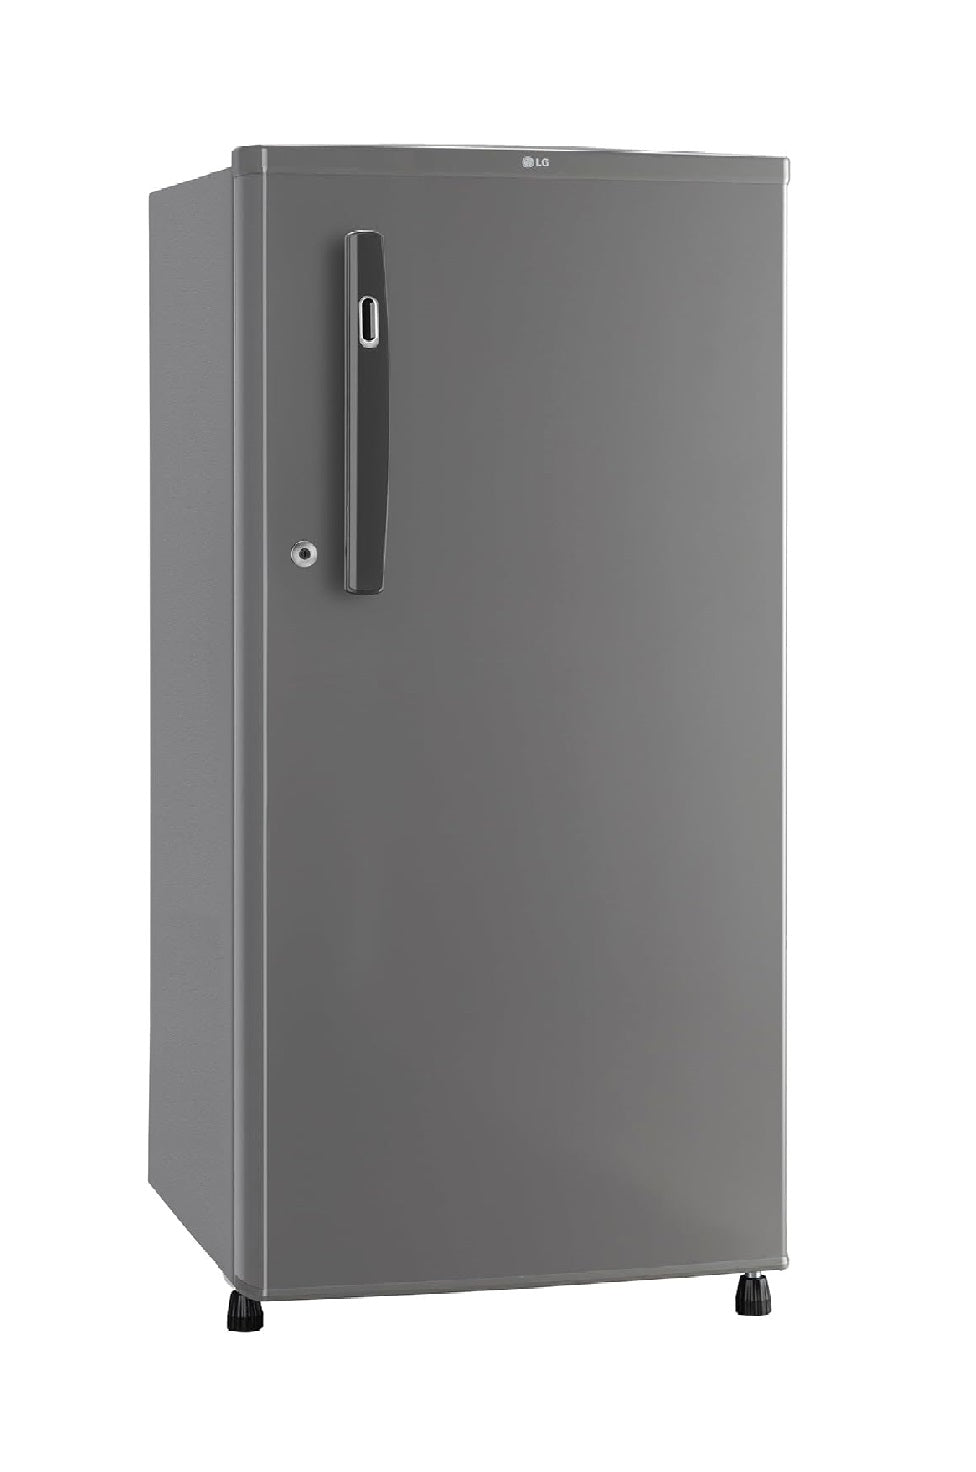 LG GL-B199ODGC 185L Direct-Cool Single Door Refrigerator, Dim Grey